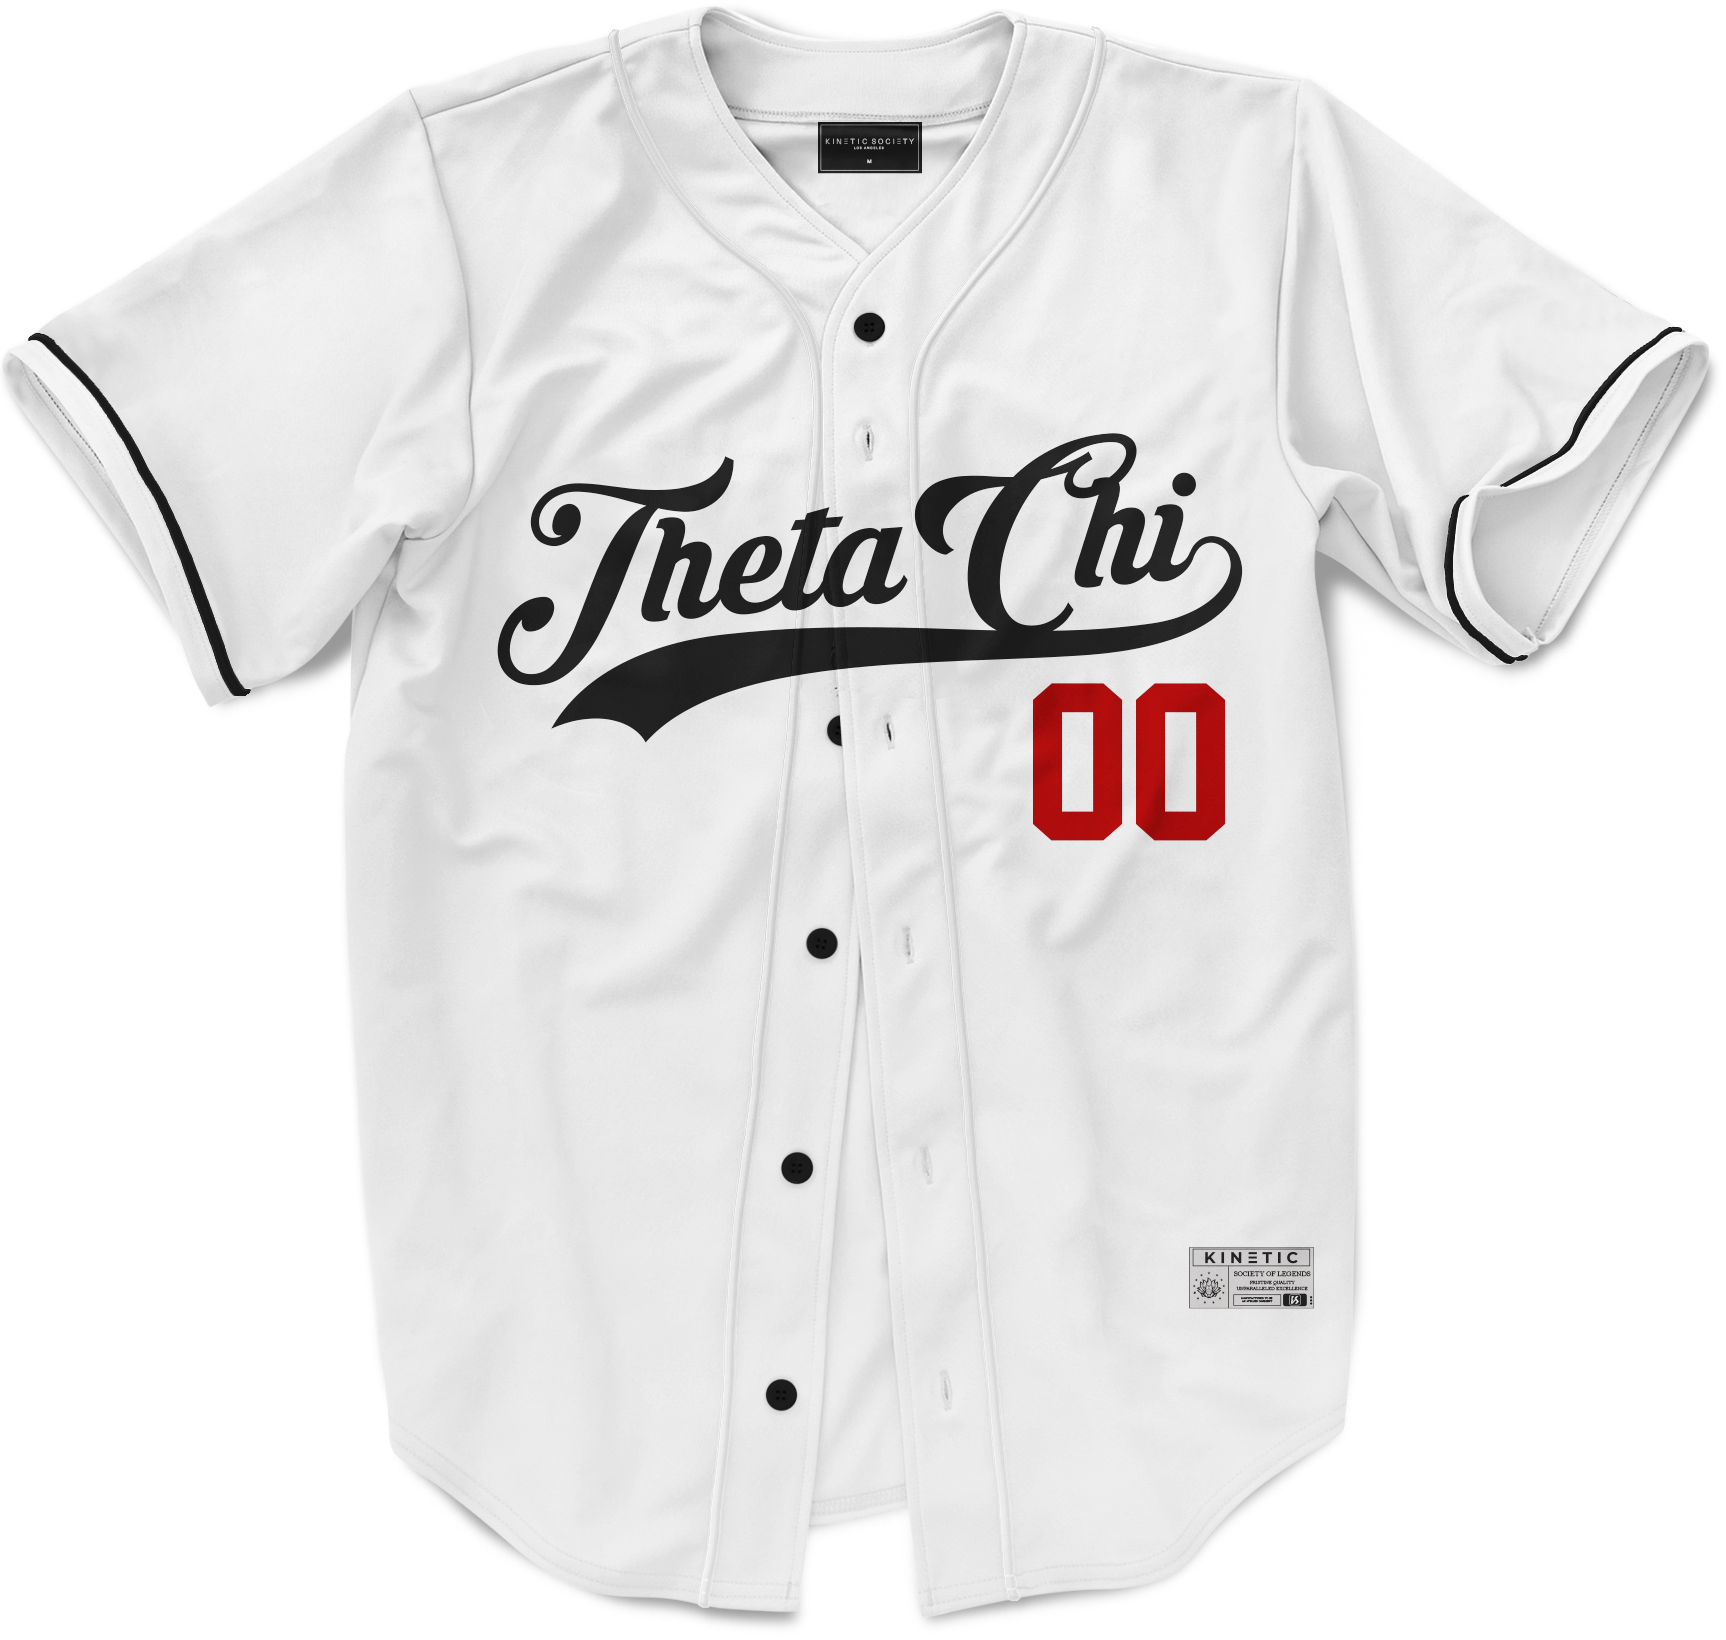 Theta Chi - Classic Ballpark Red Baseball Jersey